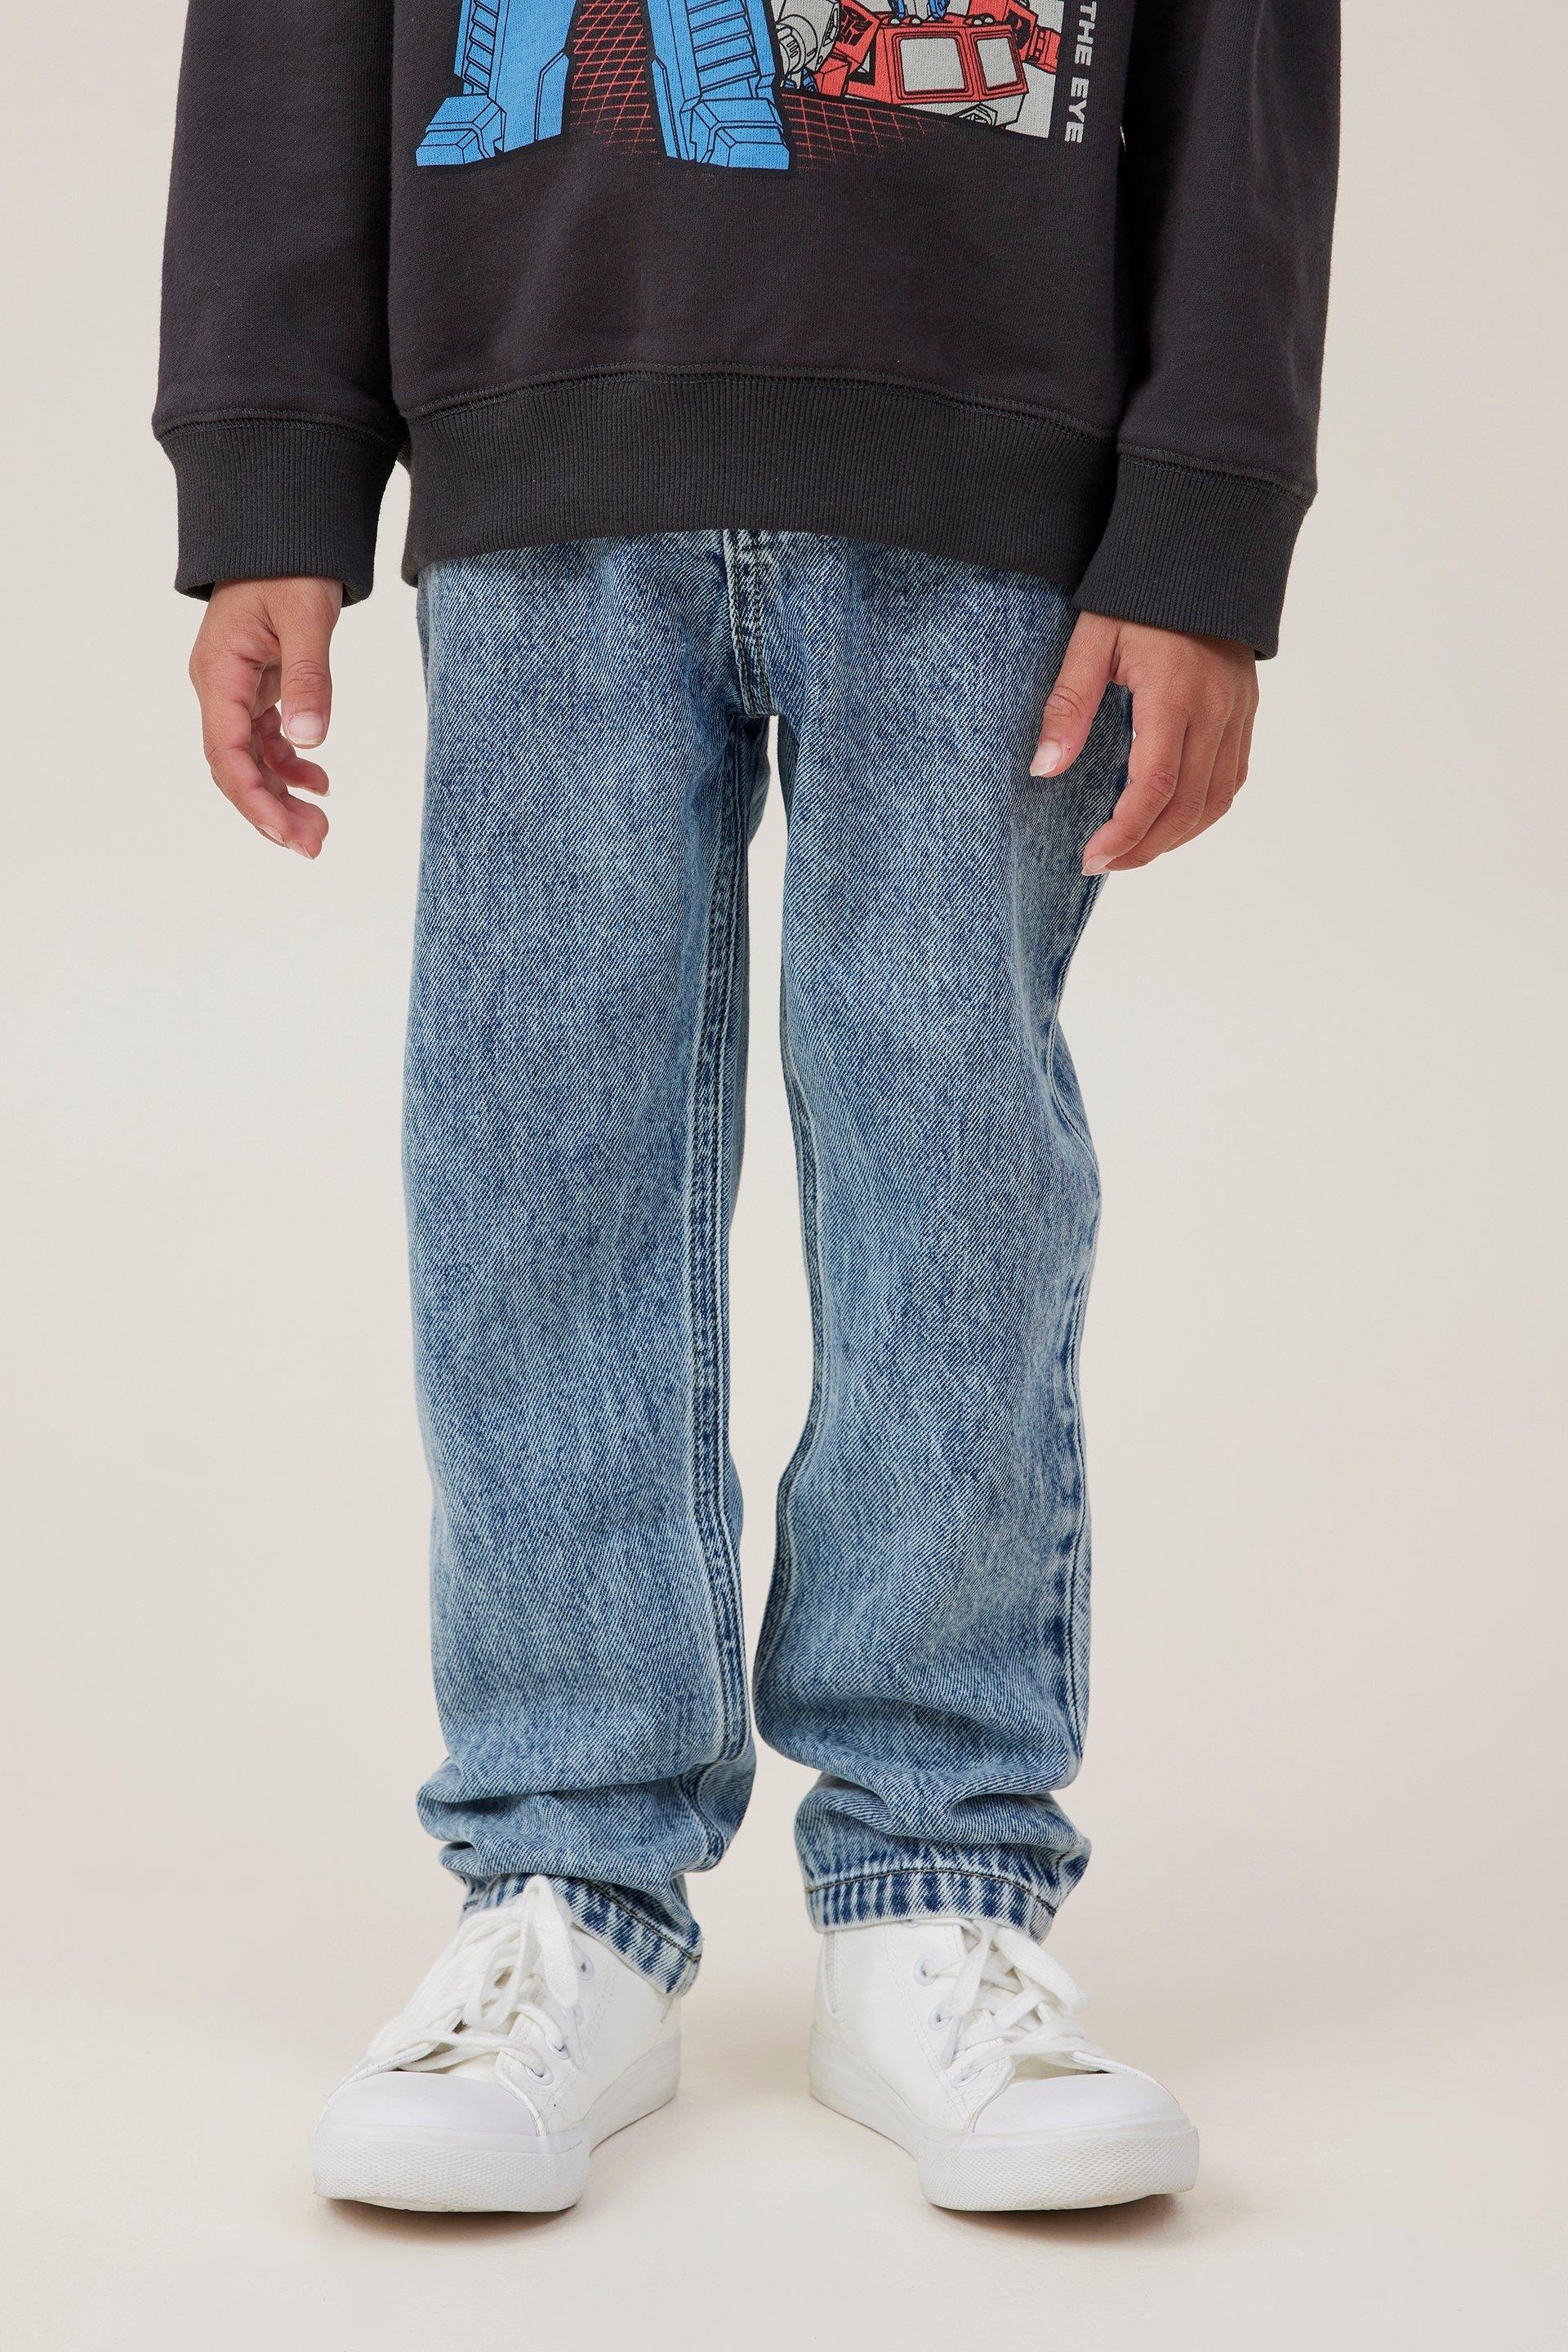 Cotton On Kids - Regular Fit Jean - Byron mid blue